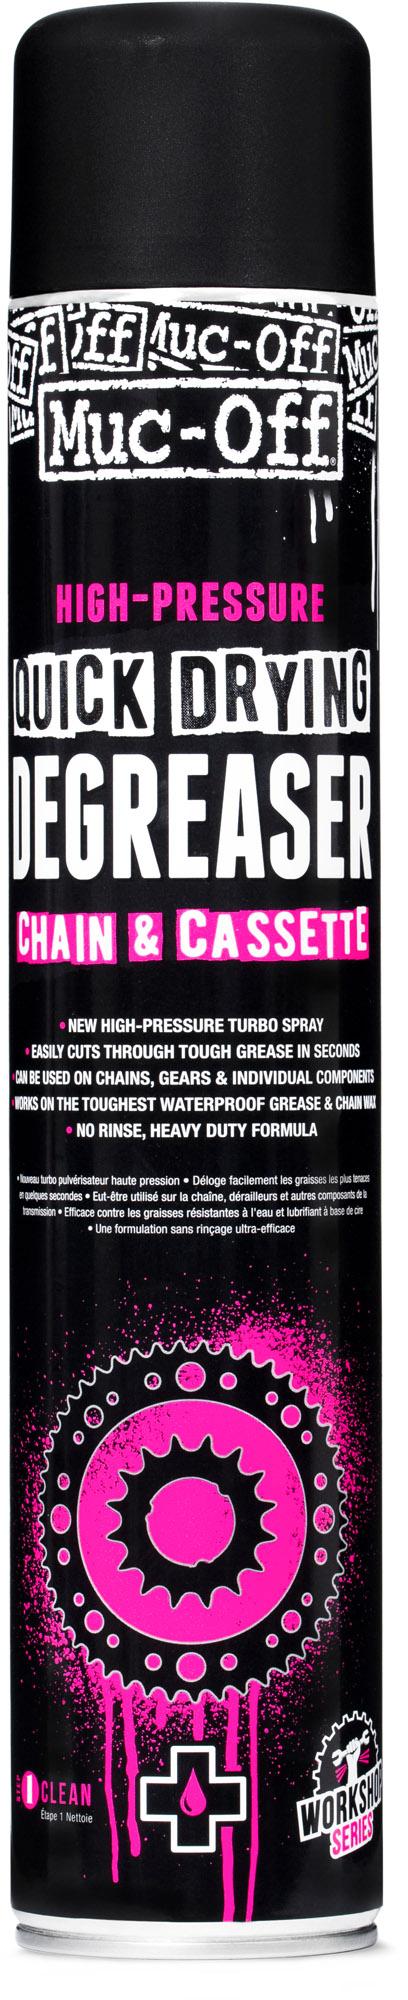 Muc-off High-pressure Quick Dry Degreaser - 750ml Aerosol - Neutral